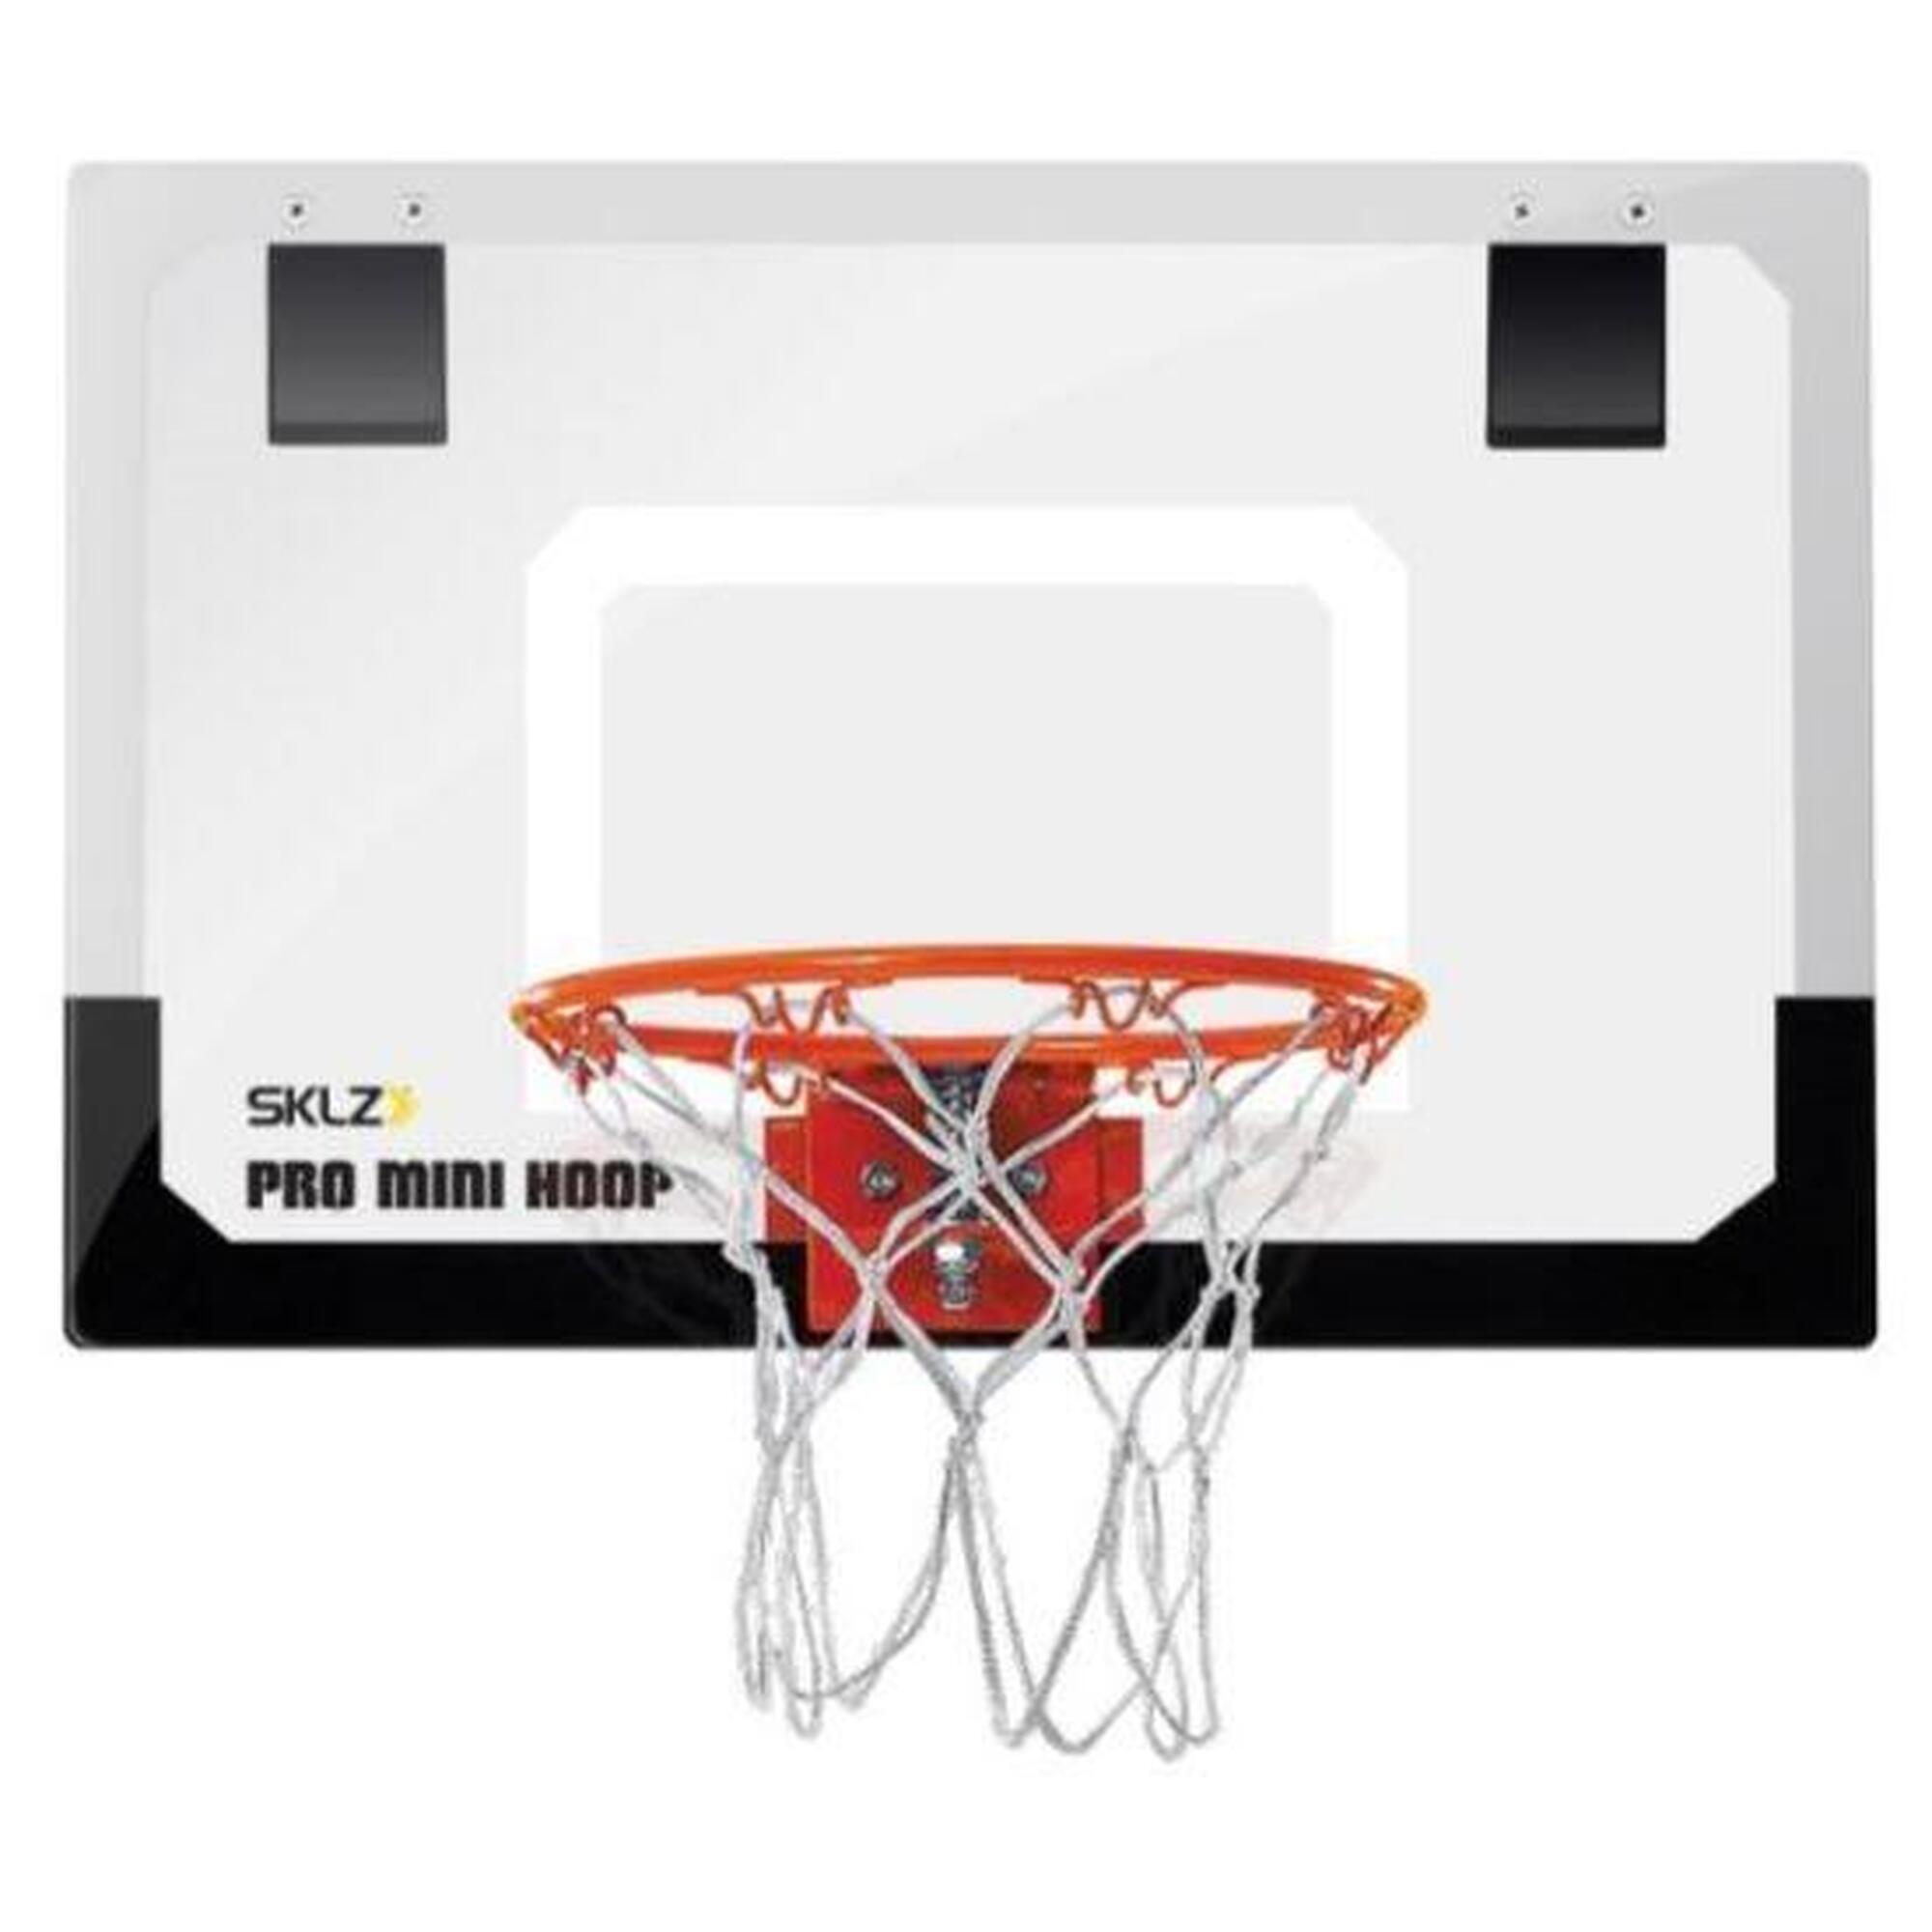 Mini canasta de baloncesto para niños, Pro Mini Hoop, SKLZ